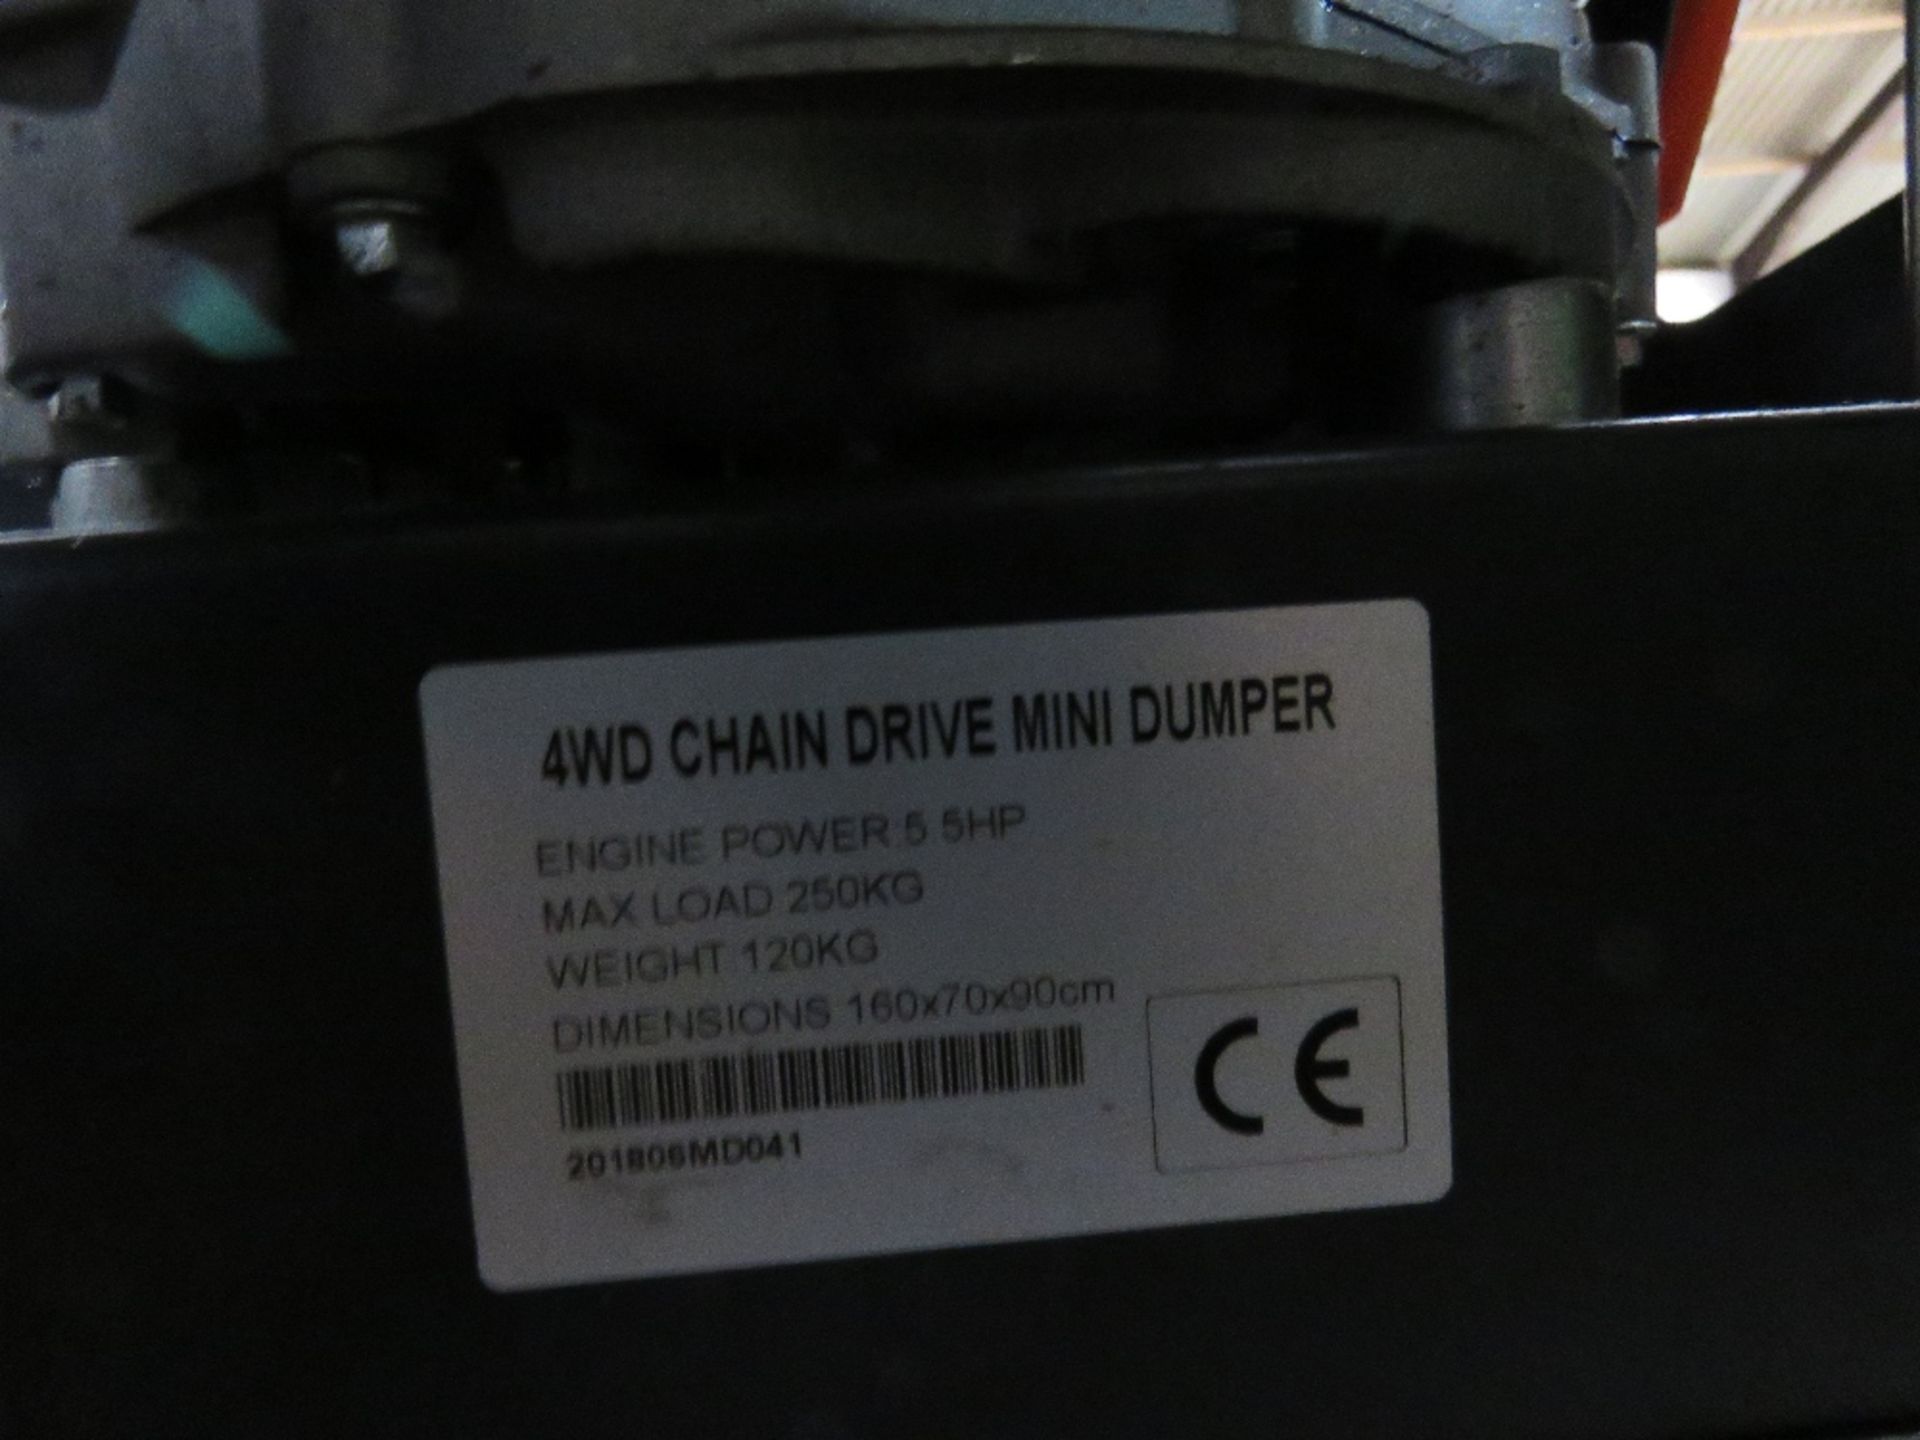 KT MD250C 4WD MINI DUMPER, PETROL ENGINED - Image 4 of 5